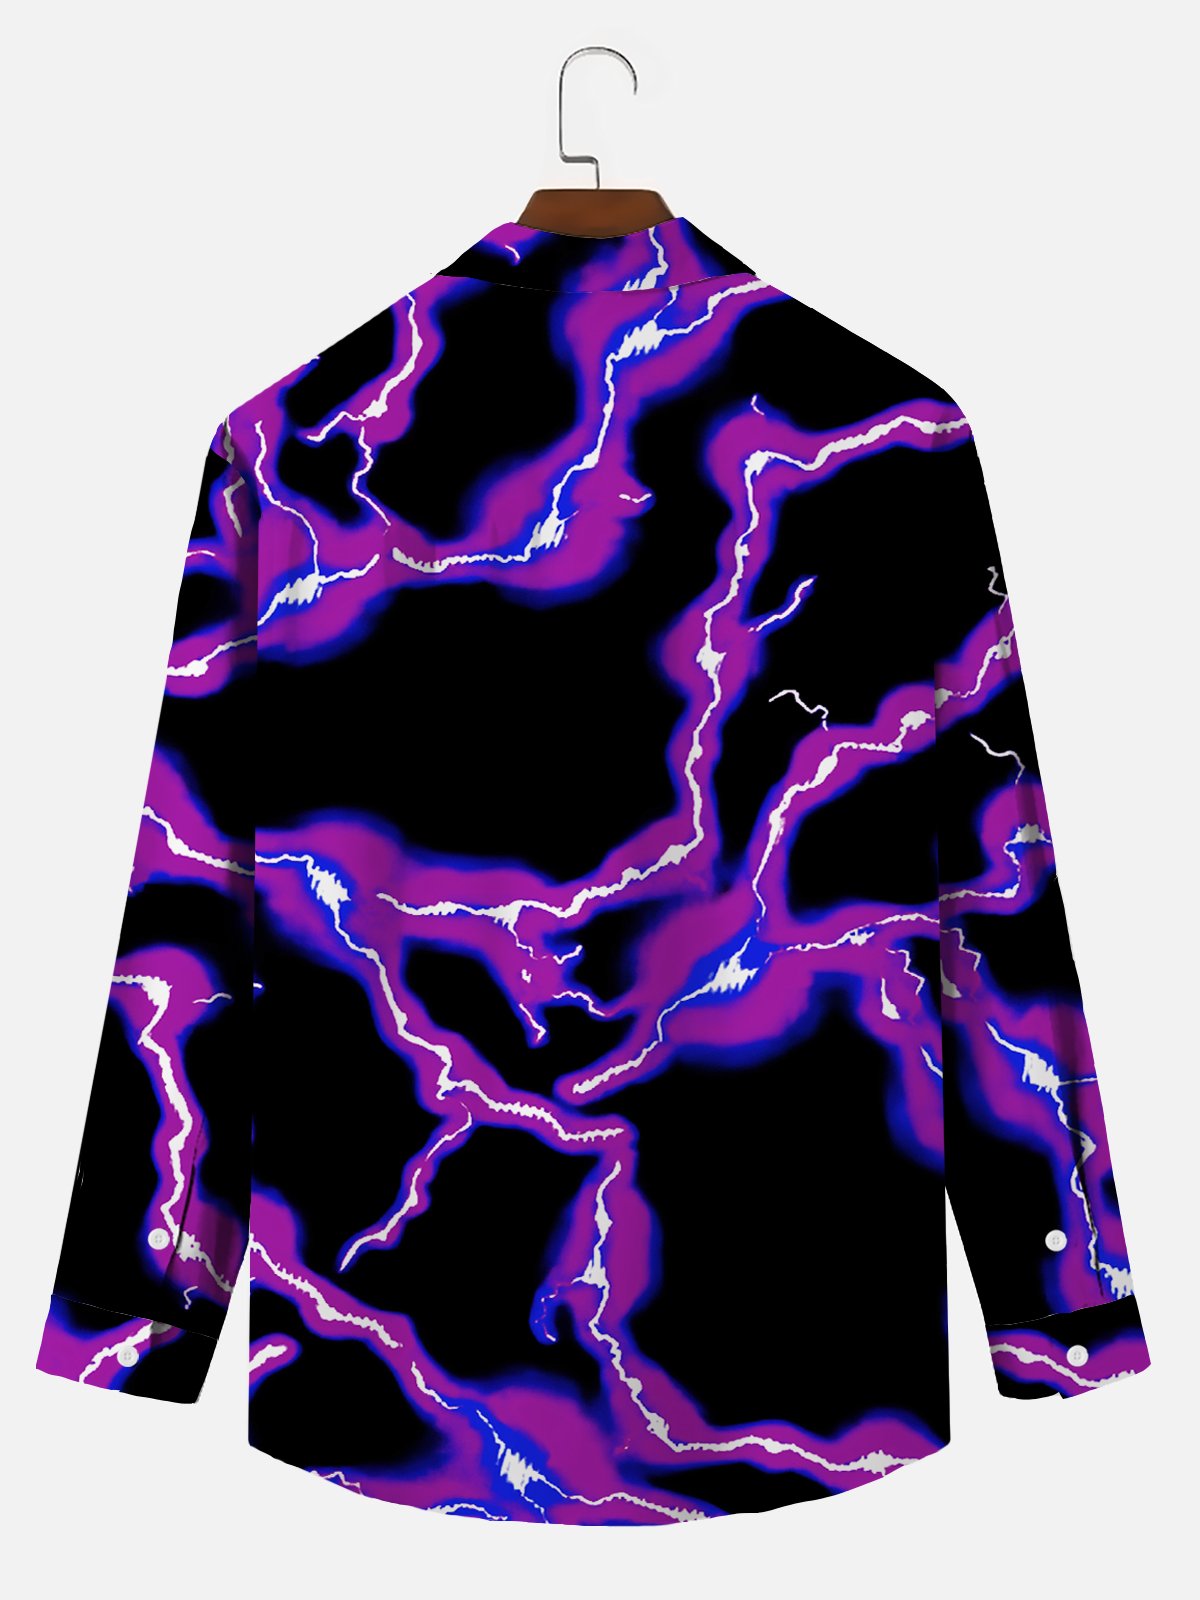 Royaura Men's Urban Fashion Shirts 3D Lightning Gradient Art Large Size Easy Care Trendy Casual Shirts